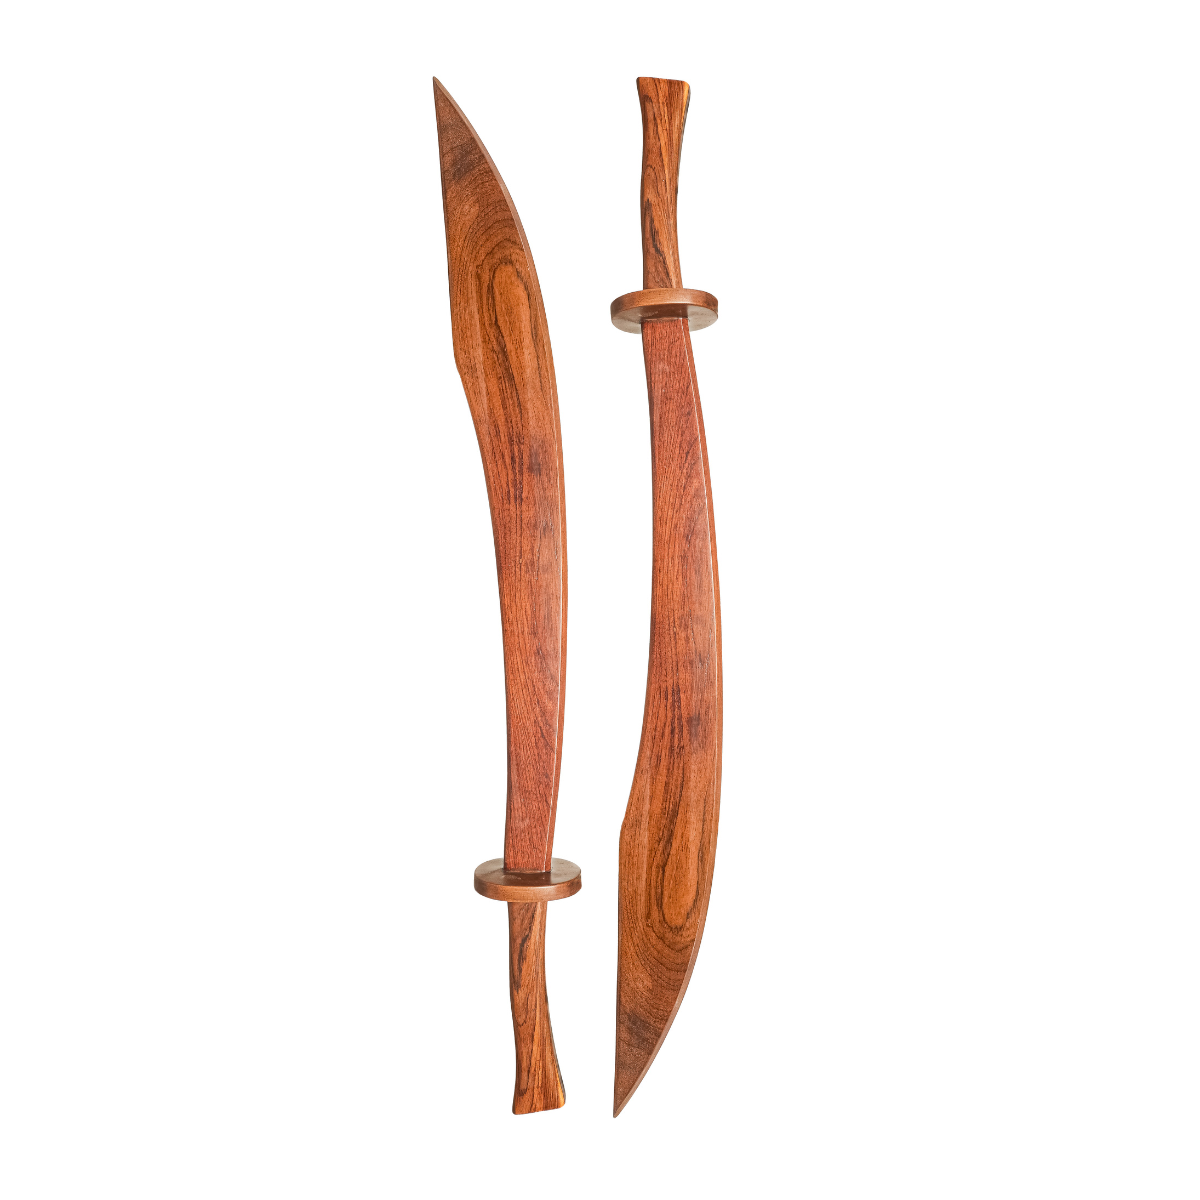 Wushu Wooden Practice Sword - Type A 5